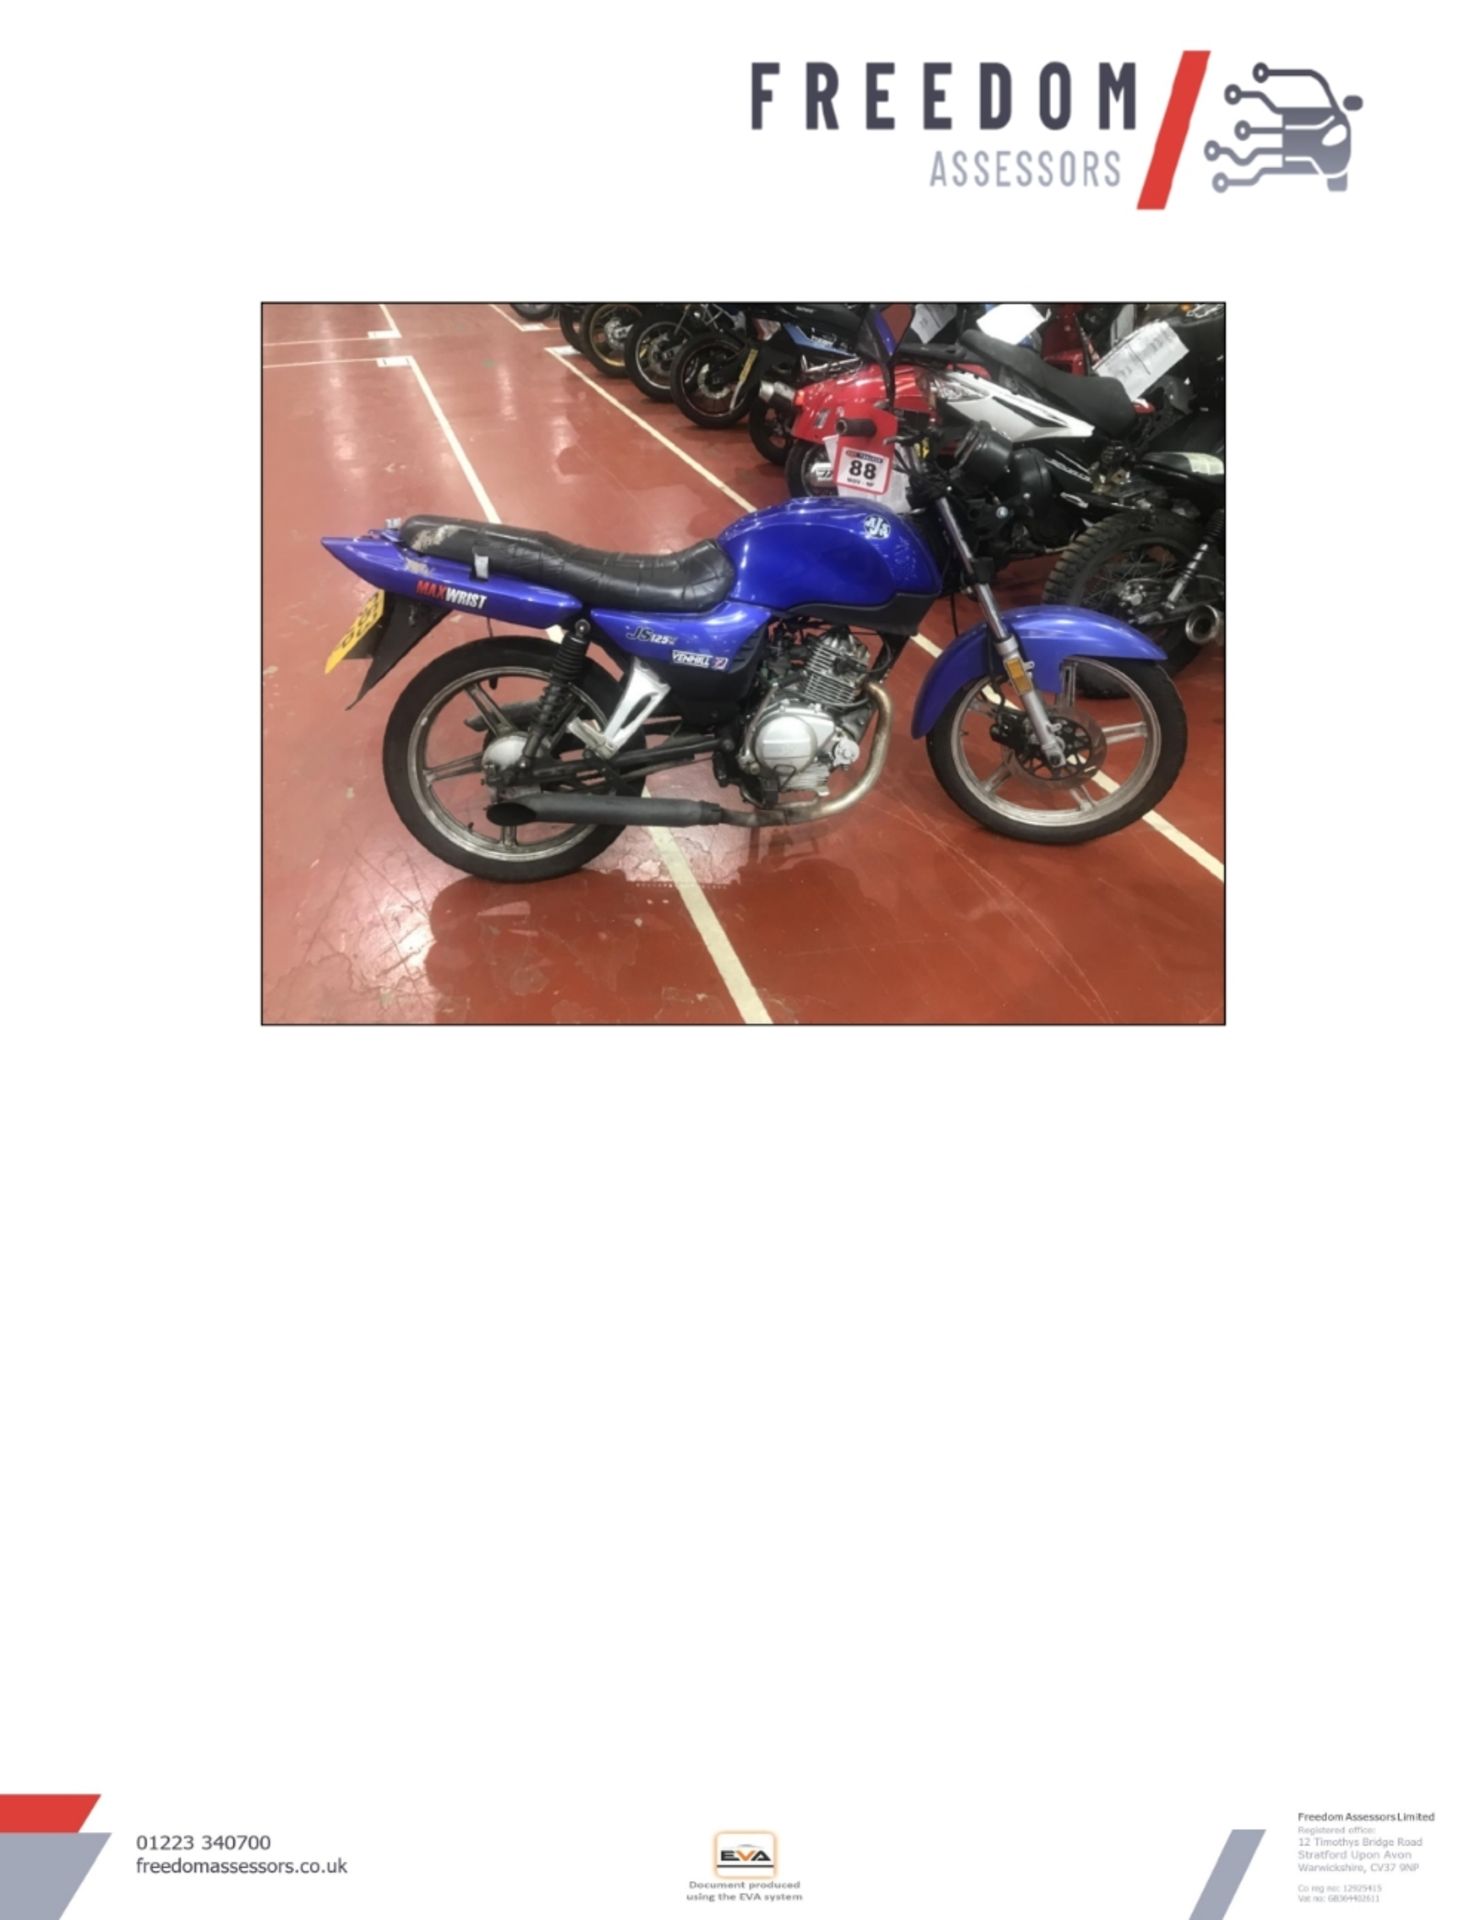 WG63 GYP JS 125-E2 Motorcycle - Image 30 of 31